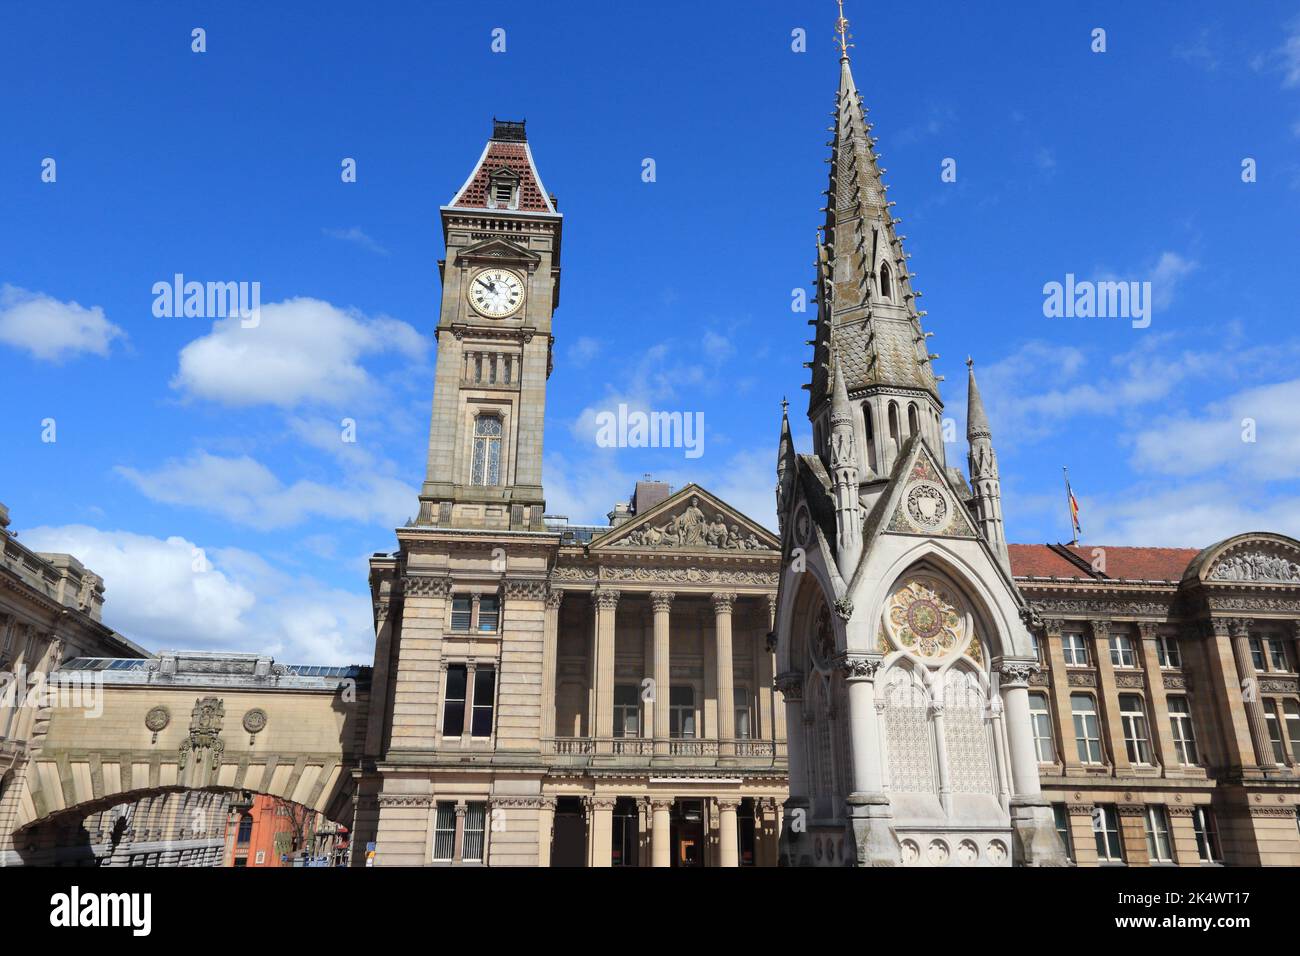 Birmingham UK landmark - Museum and Art Gallery. Seen from public square. West Midlands, England. Stock Photo